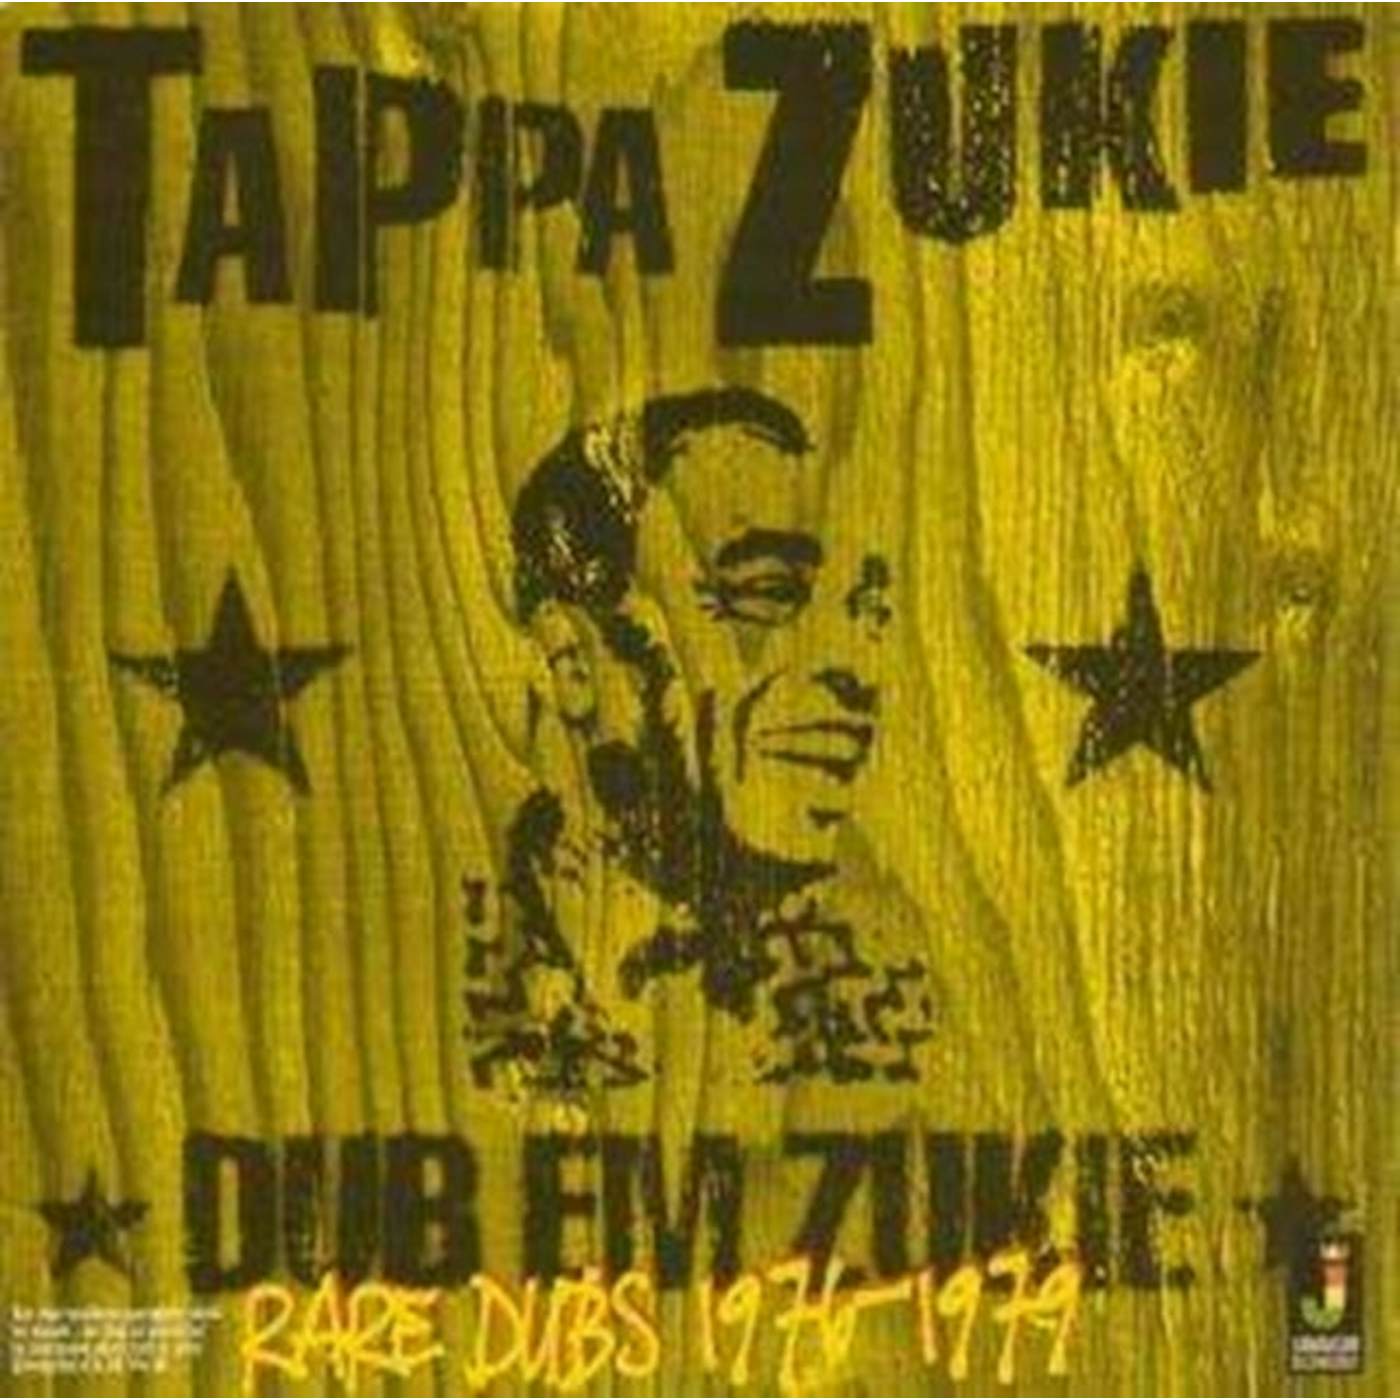  Tappa Zukie LP - Dub Em Zukie - Rare Dubs From (Vinyl)